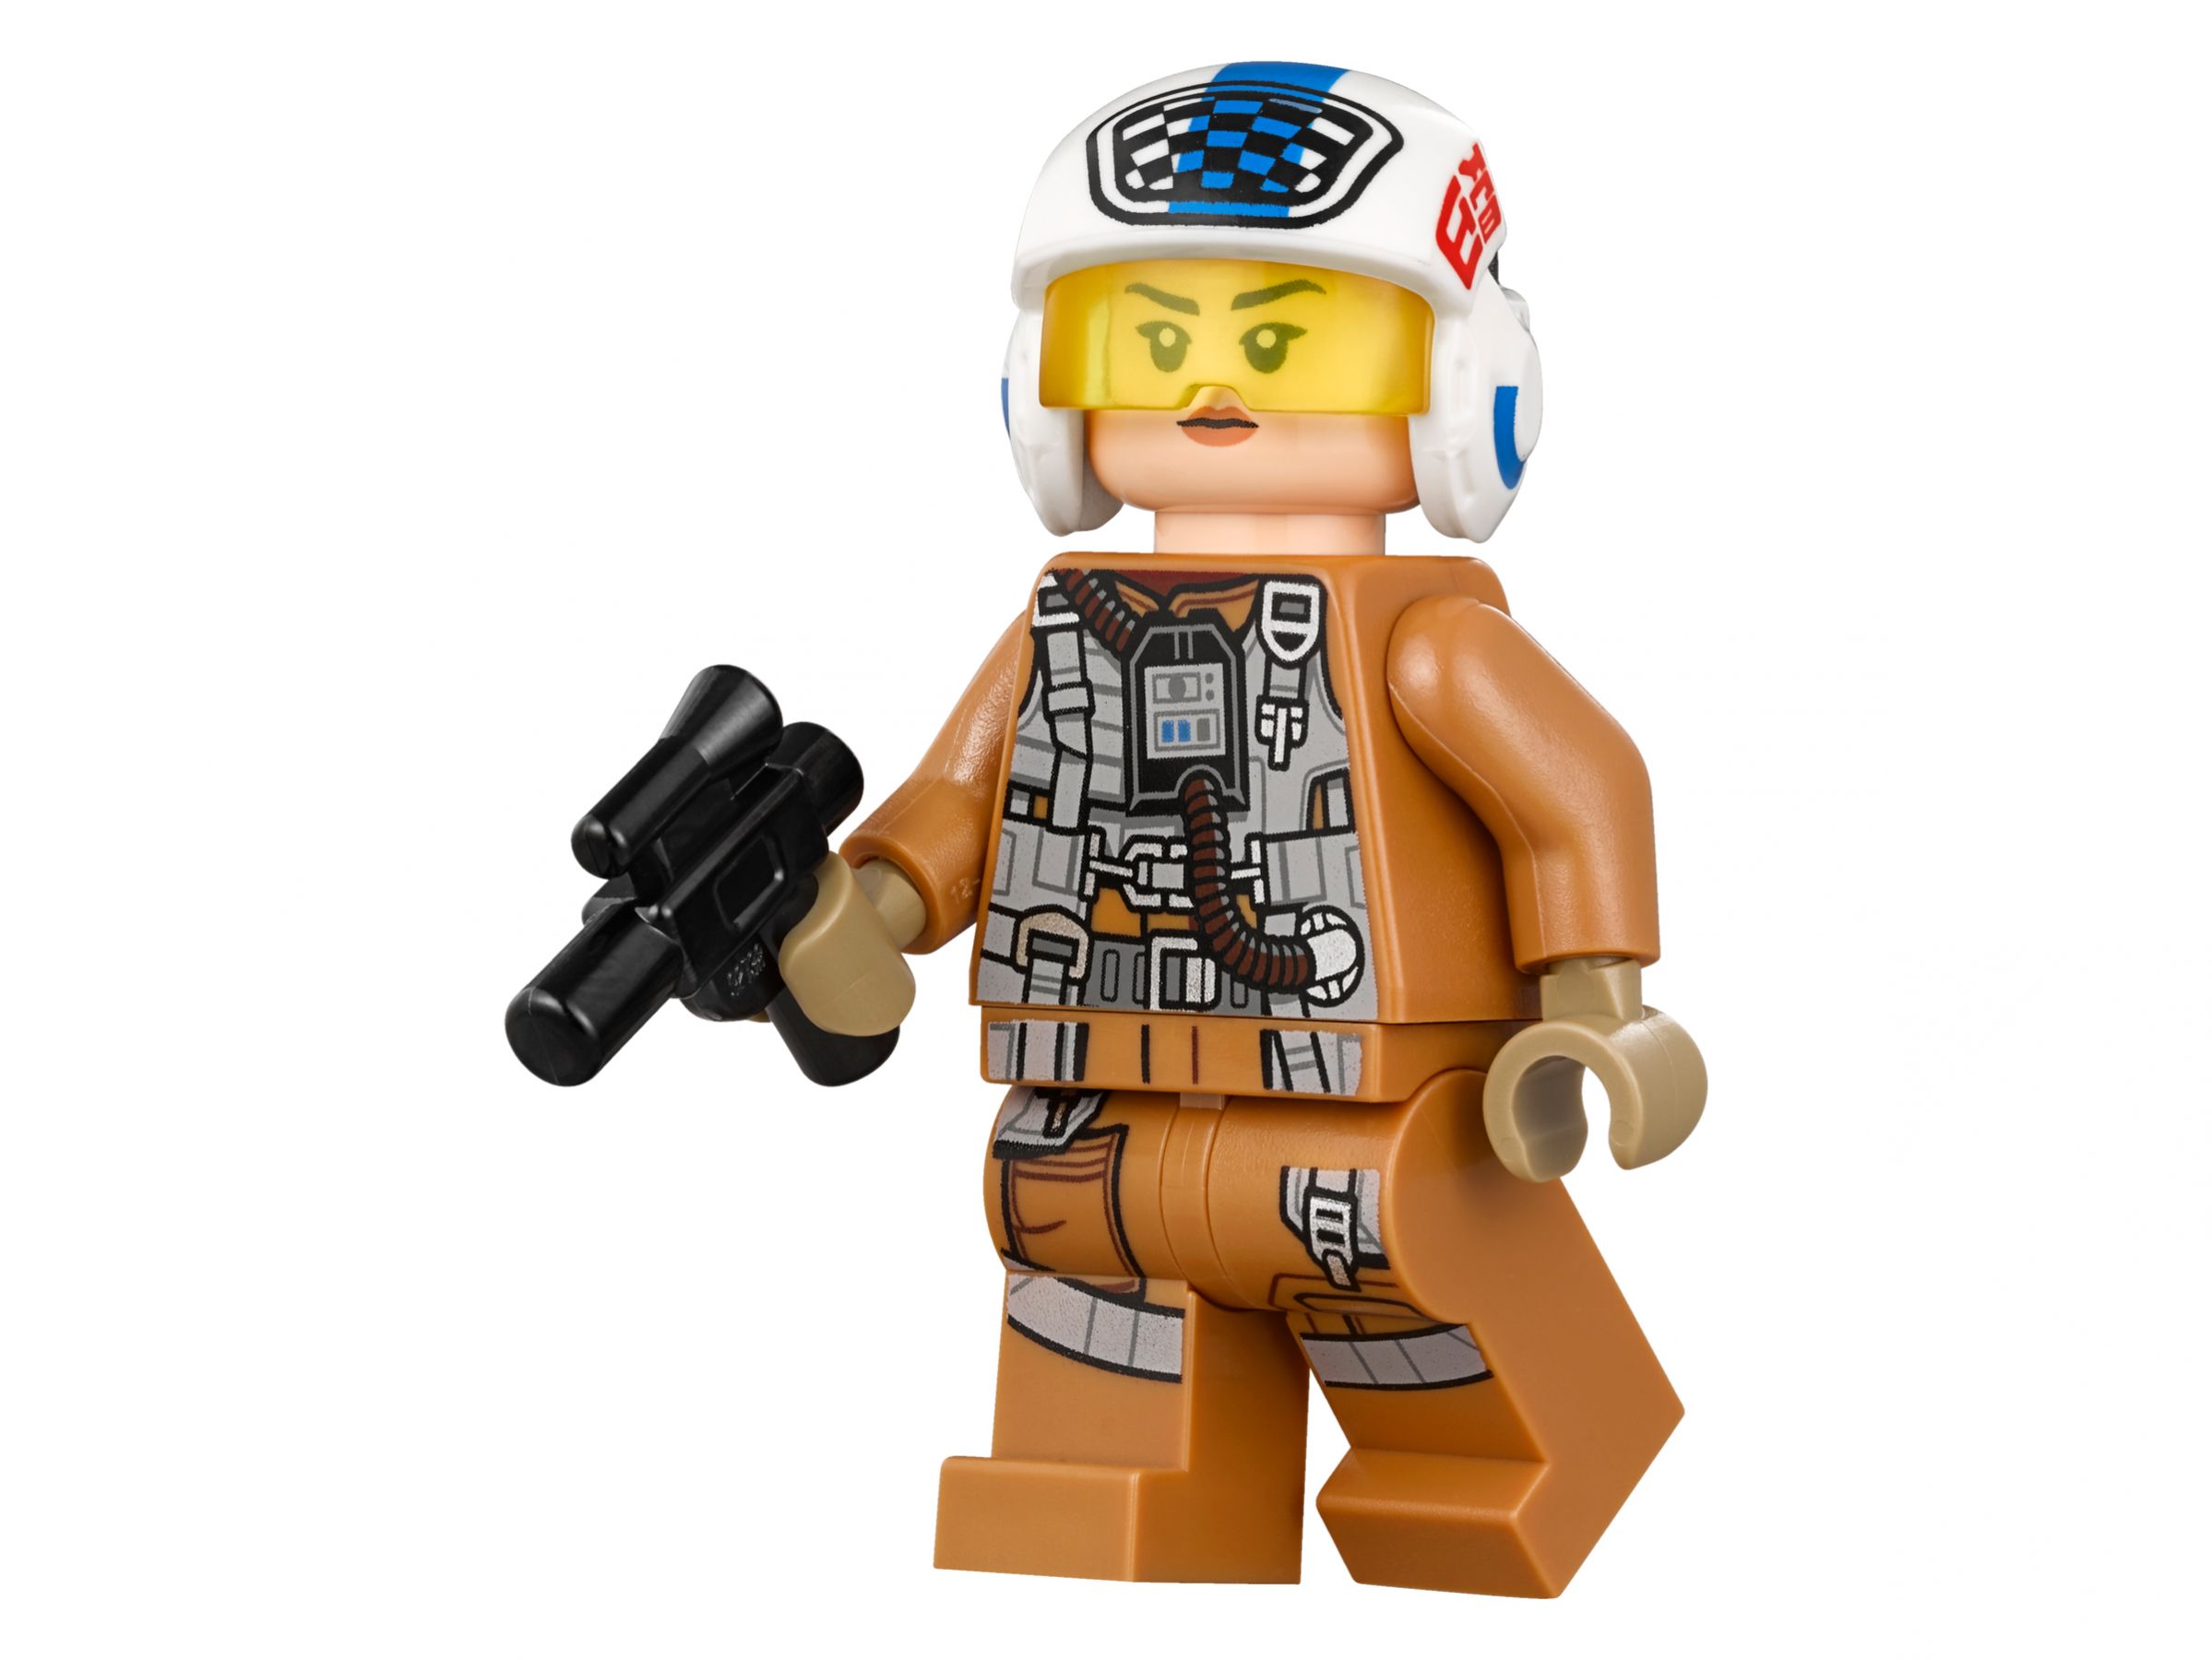 LEGO Star Wars 75188 Resistance Bomber LEGO_75188_alt11.jpg